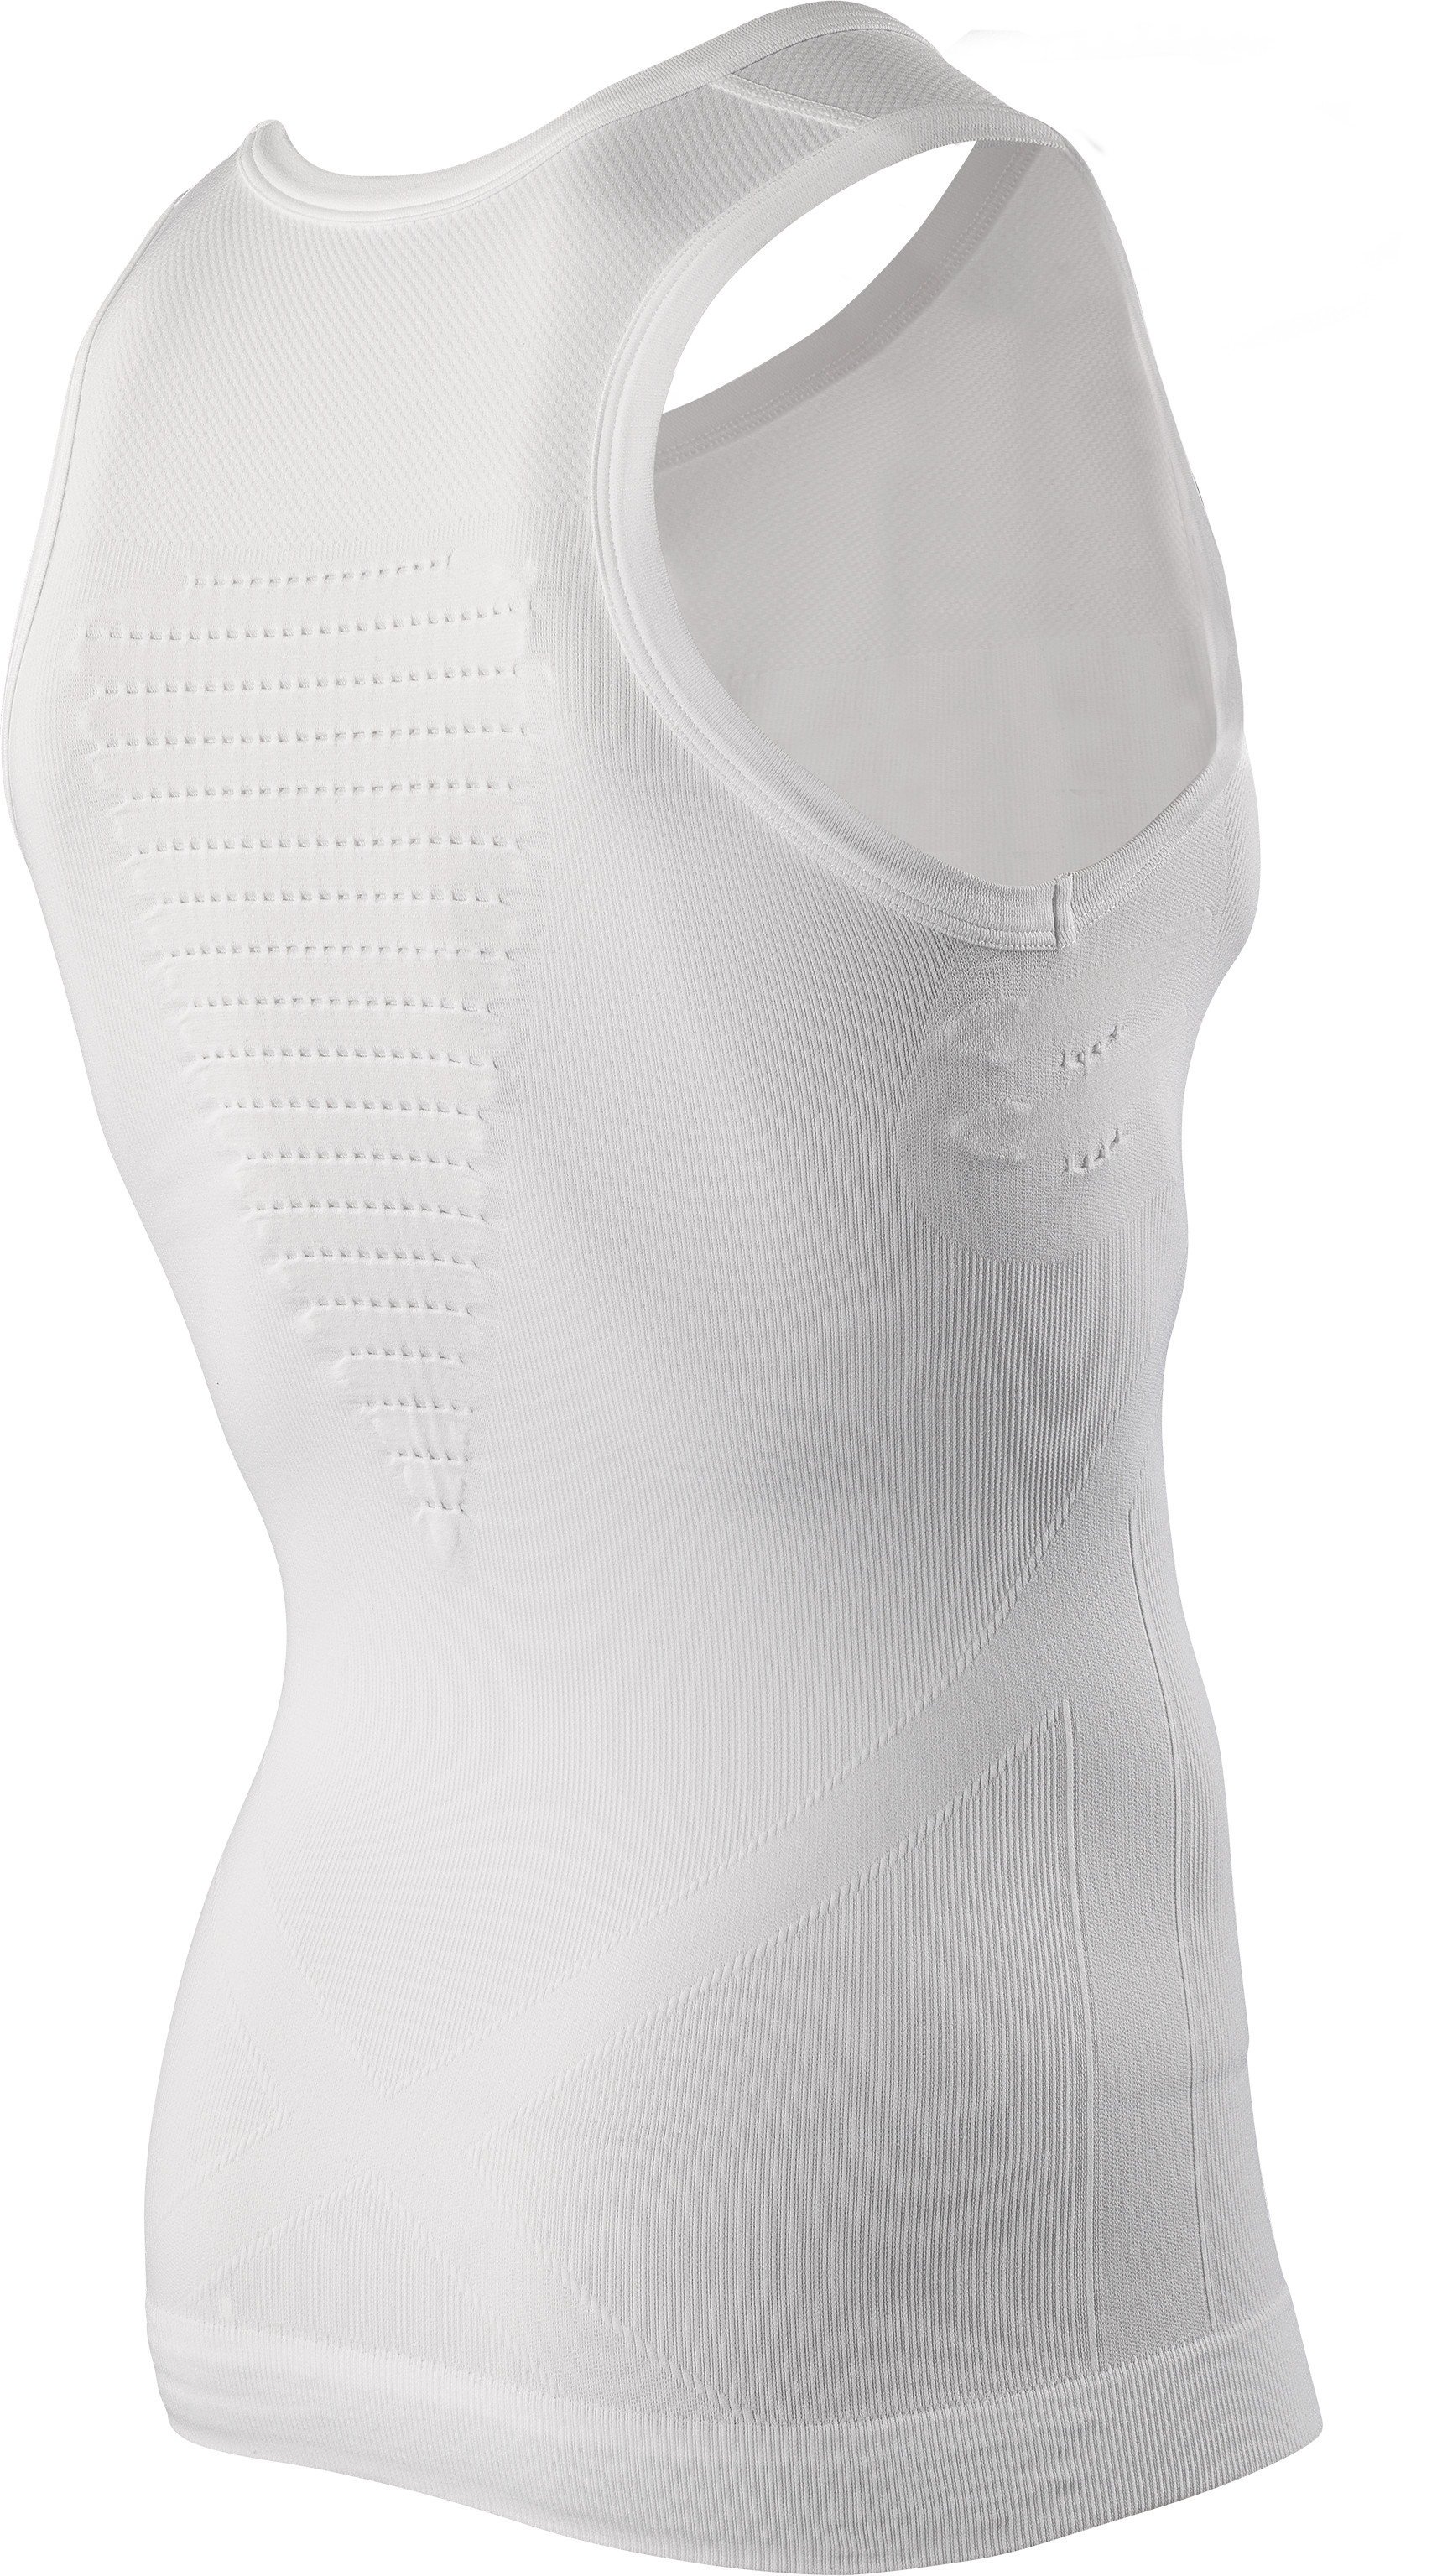 X-BIONIC Shirt Man Energizer Summerlight Singlet Front White S17-XB1